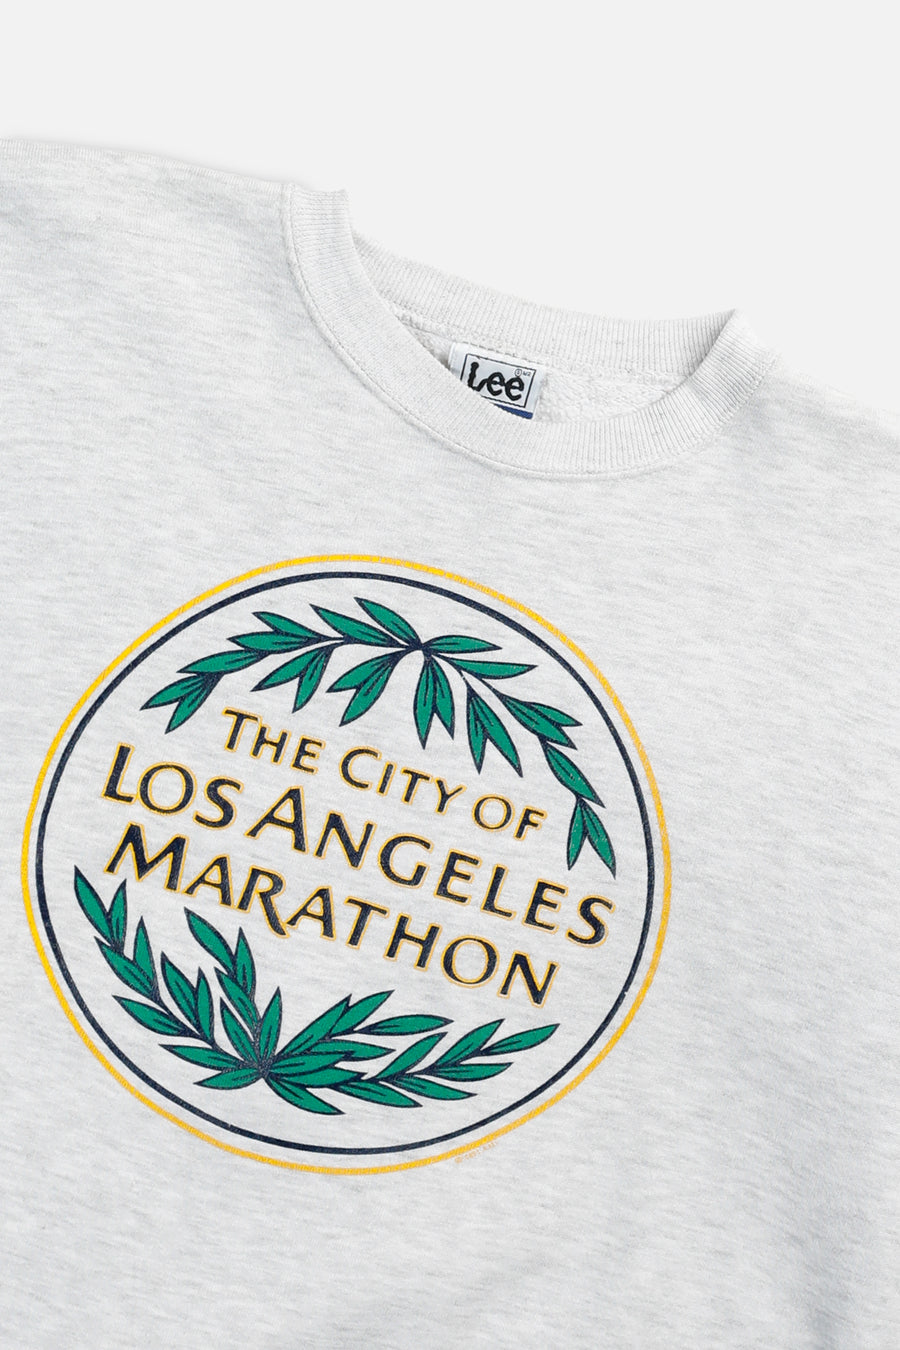 Vintage LA Marathon Sweatshirt - L